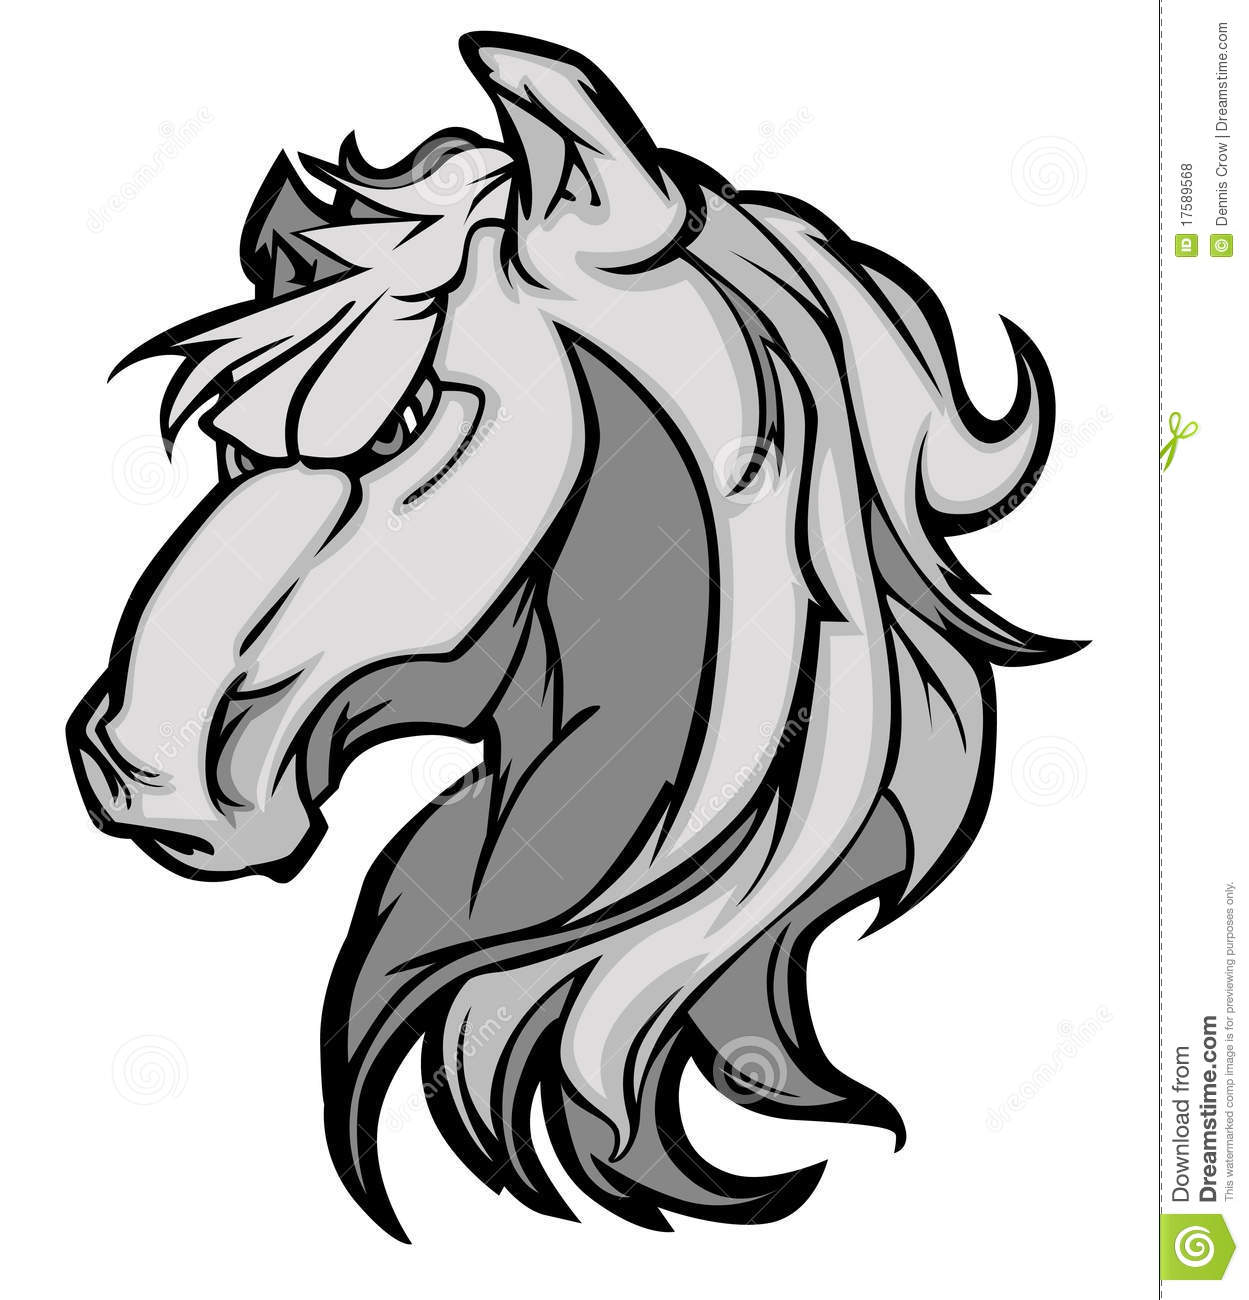 Mustang   Bronco Mascot Logo Royalty Free Stock Photos   Image